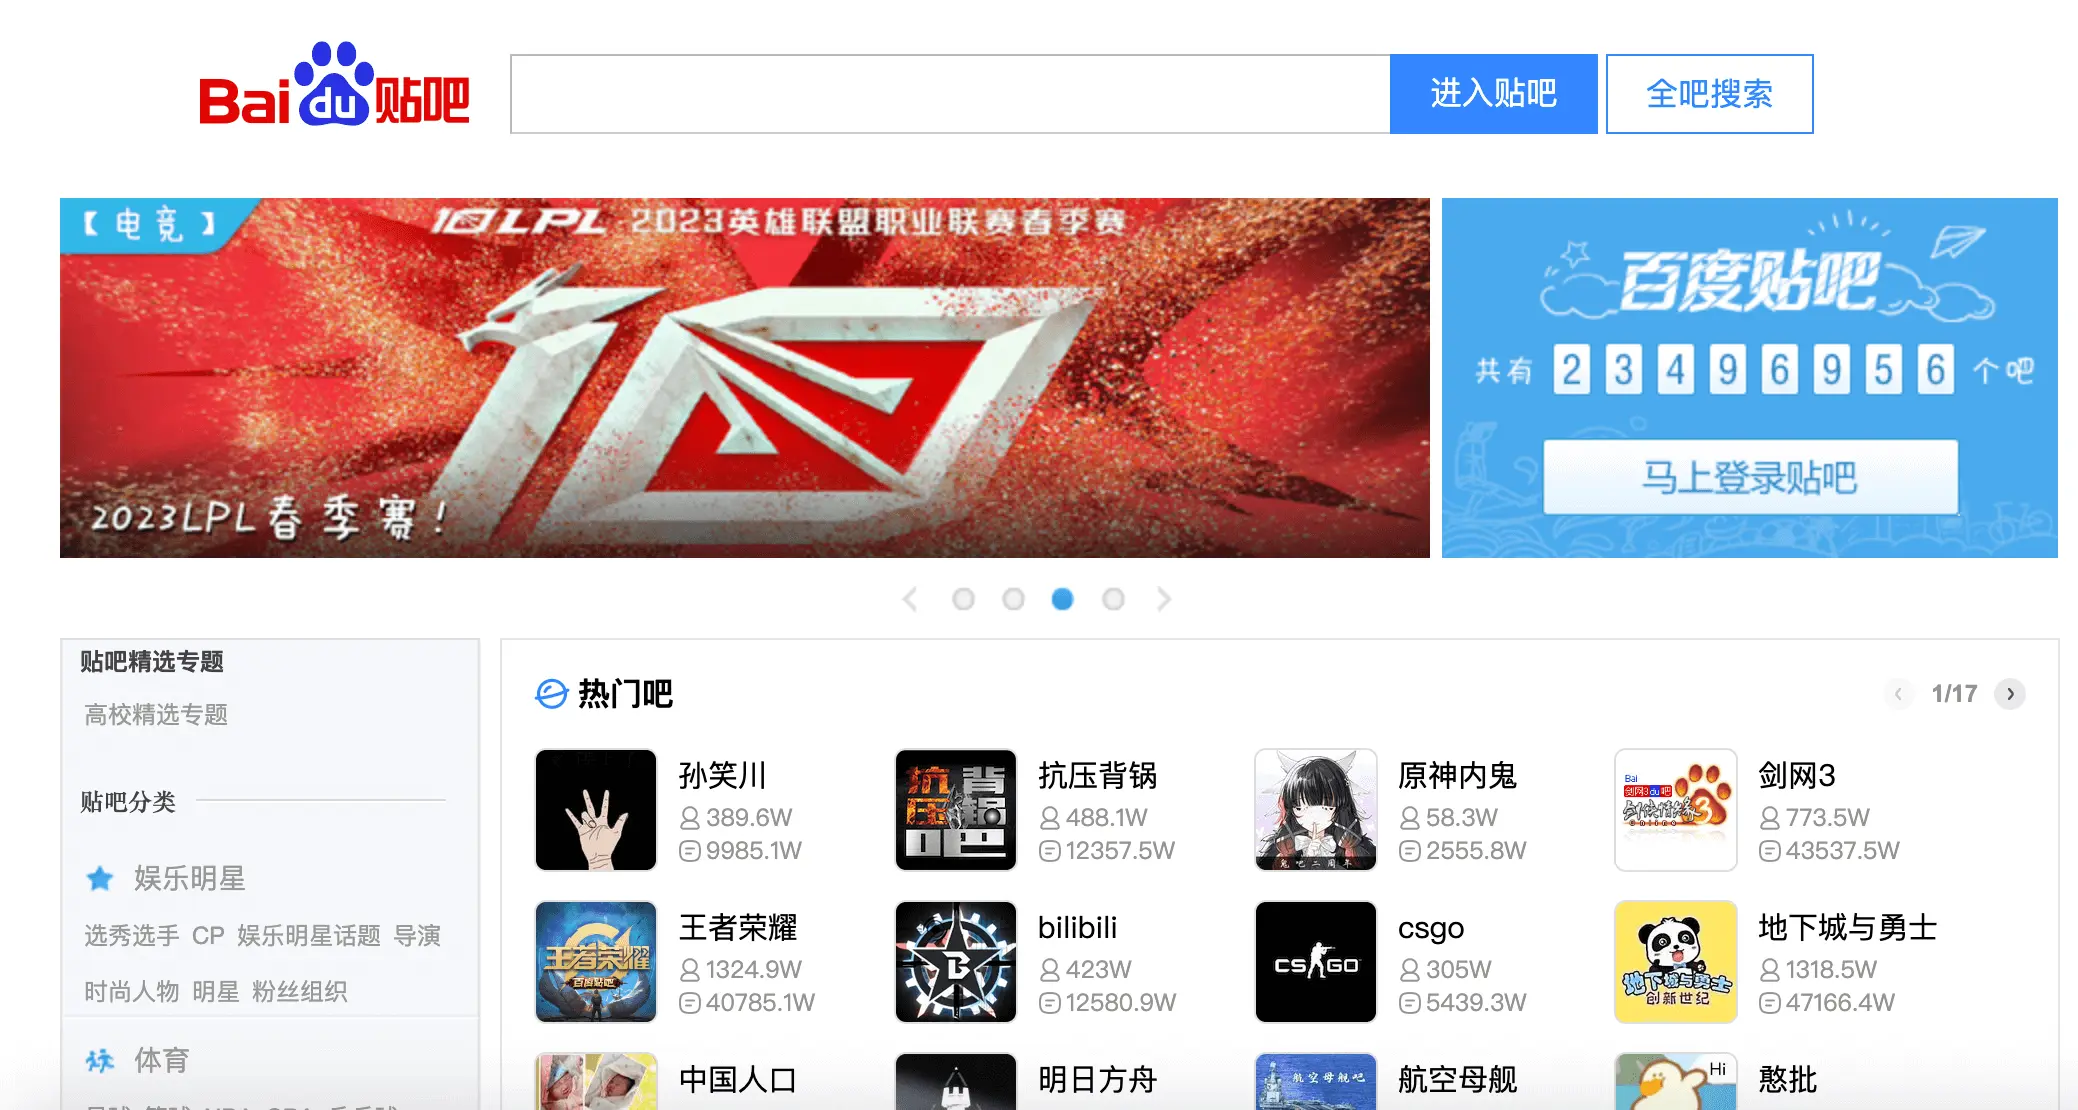 Baidu Tieba is one of the largest online forums